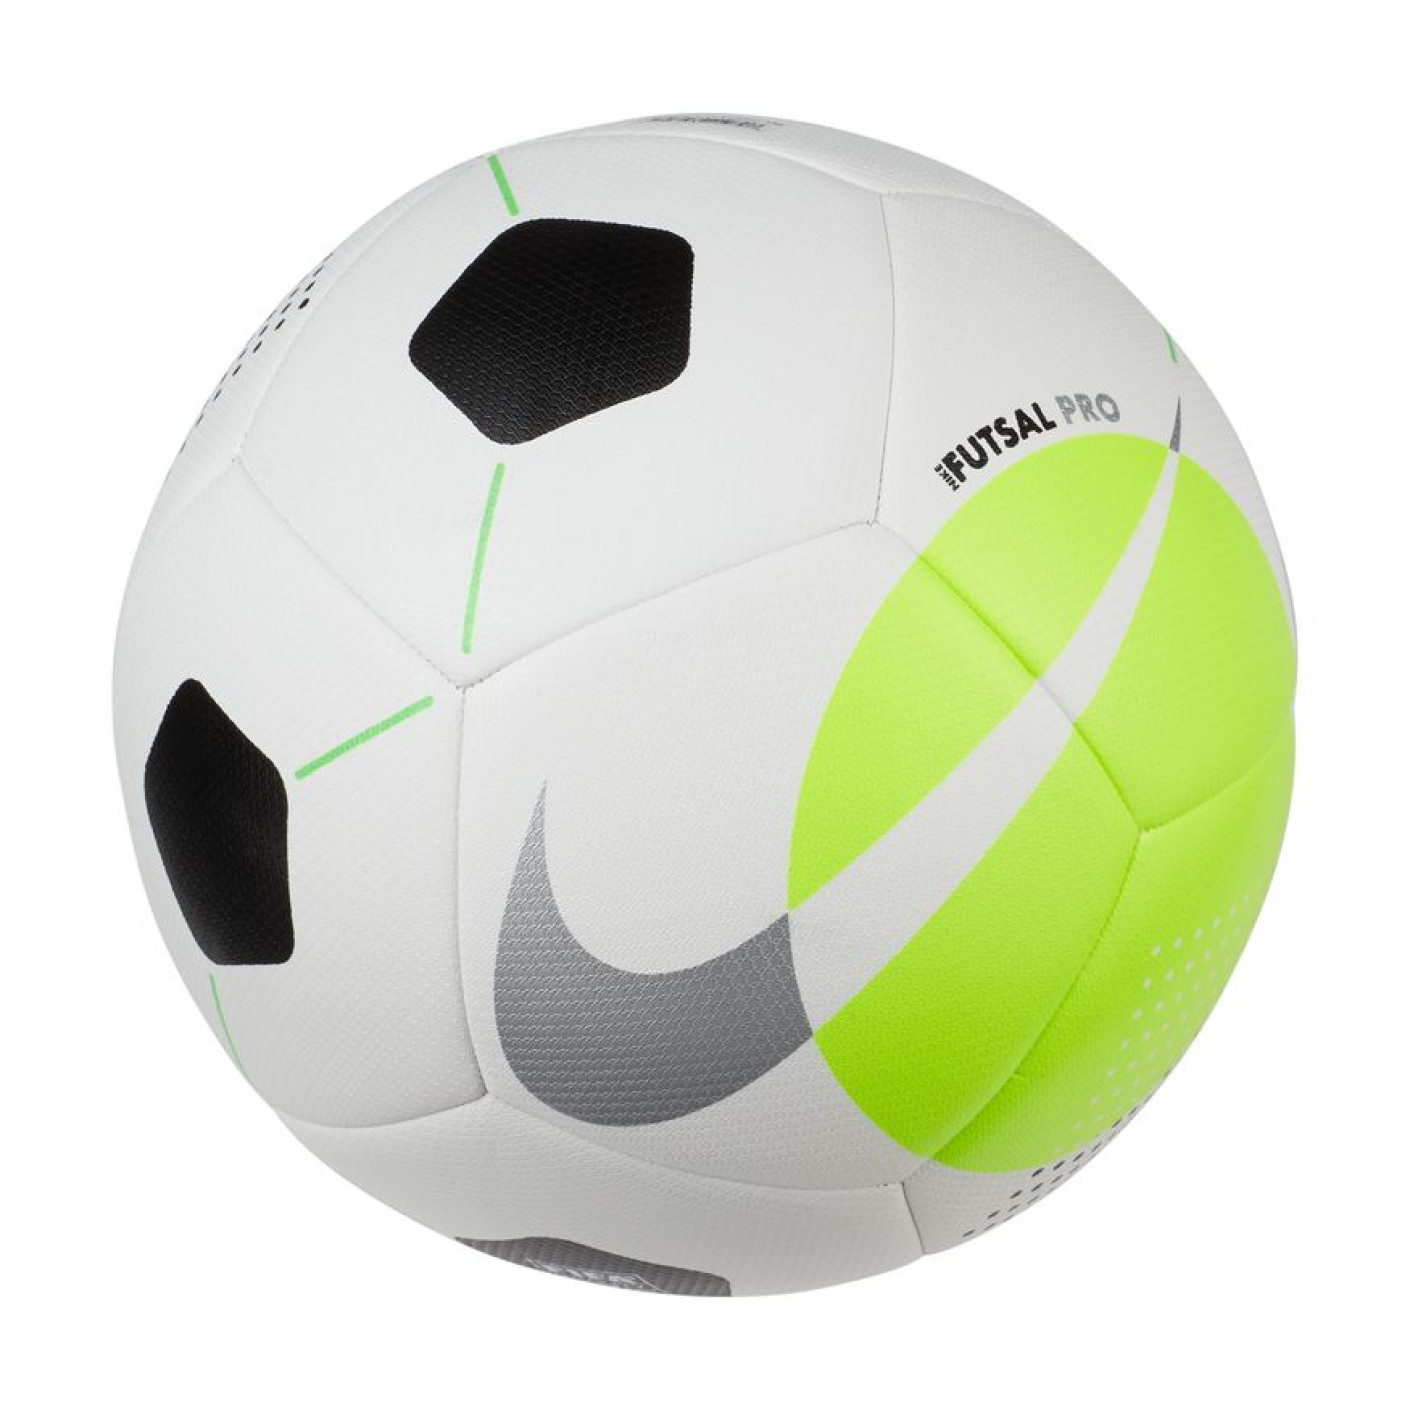 Nike Futsal Pro Ballon Taille 4 Blanc